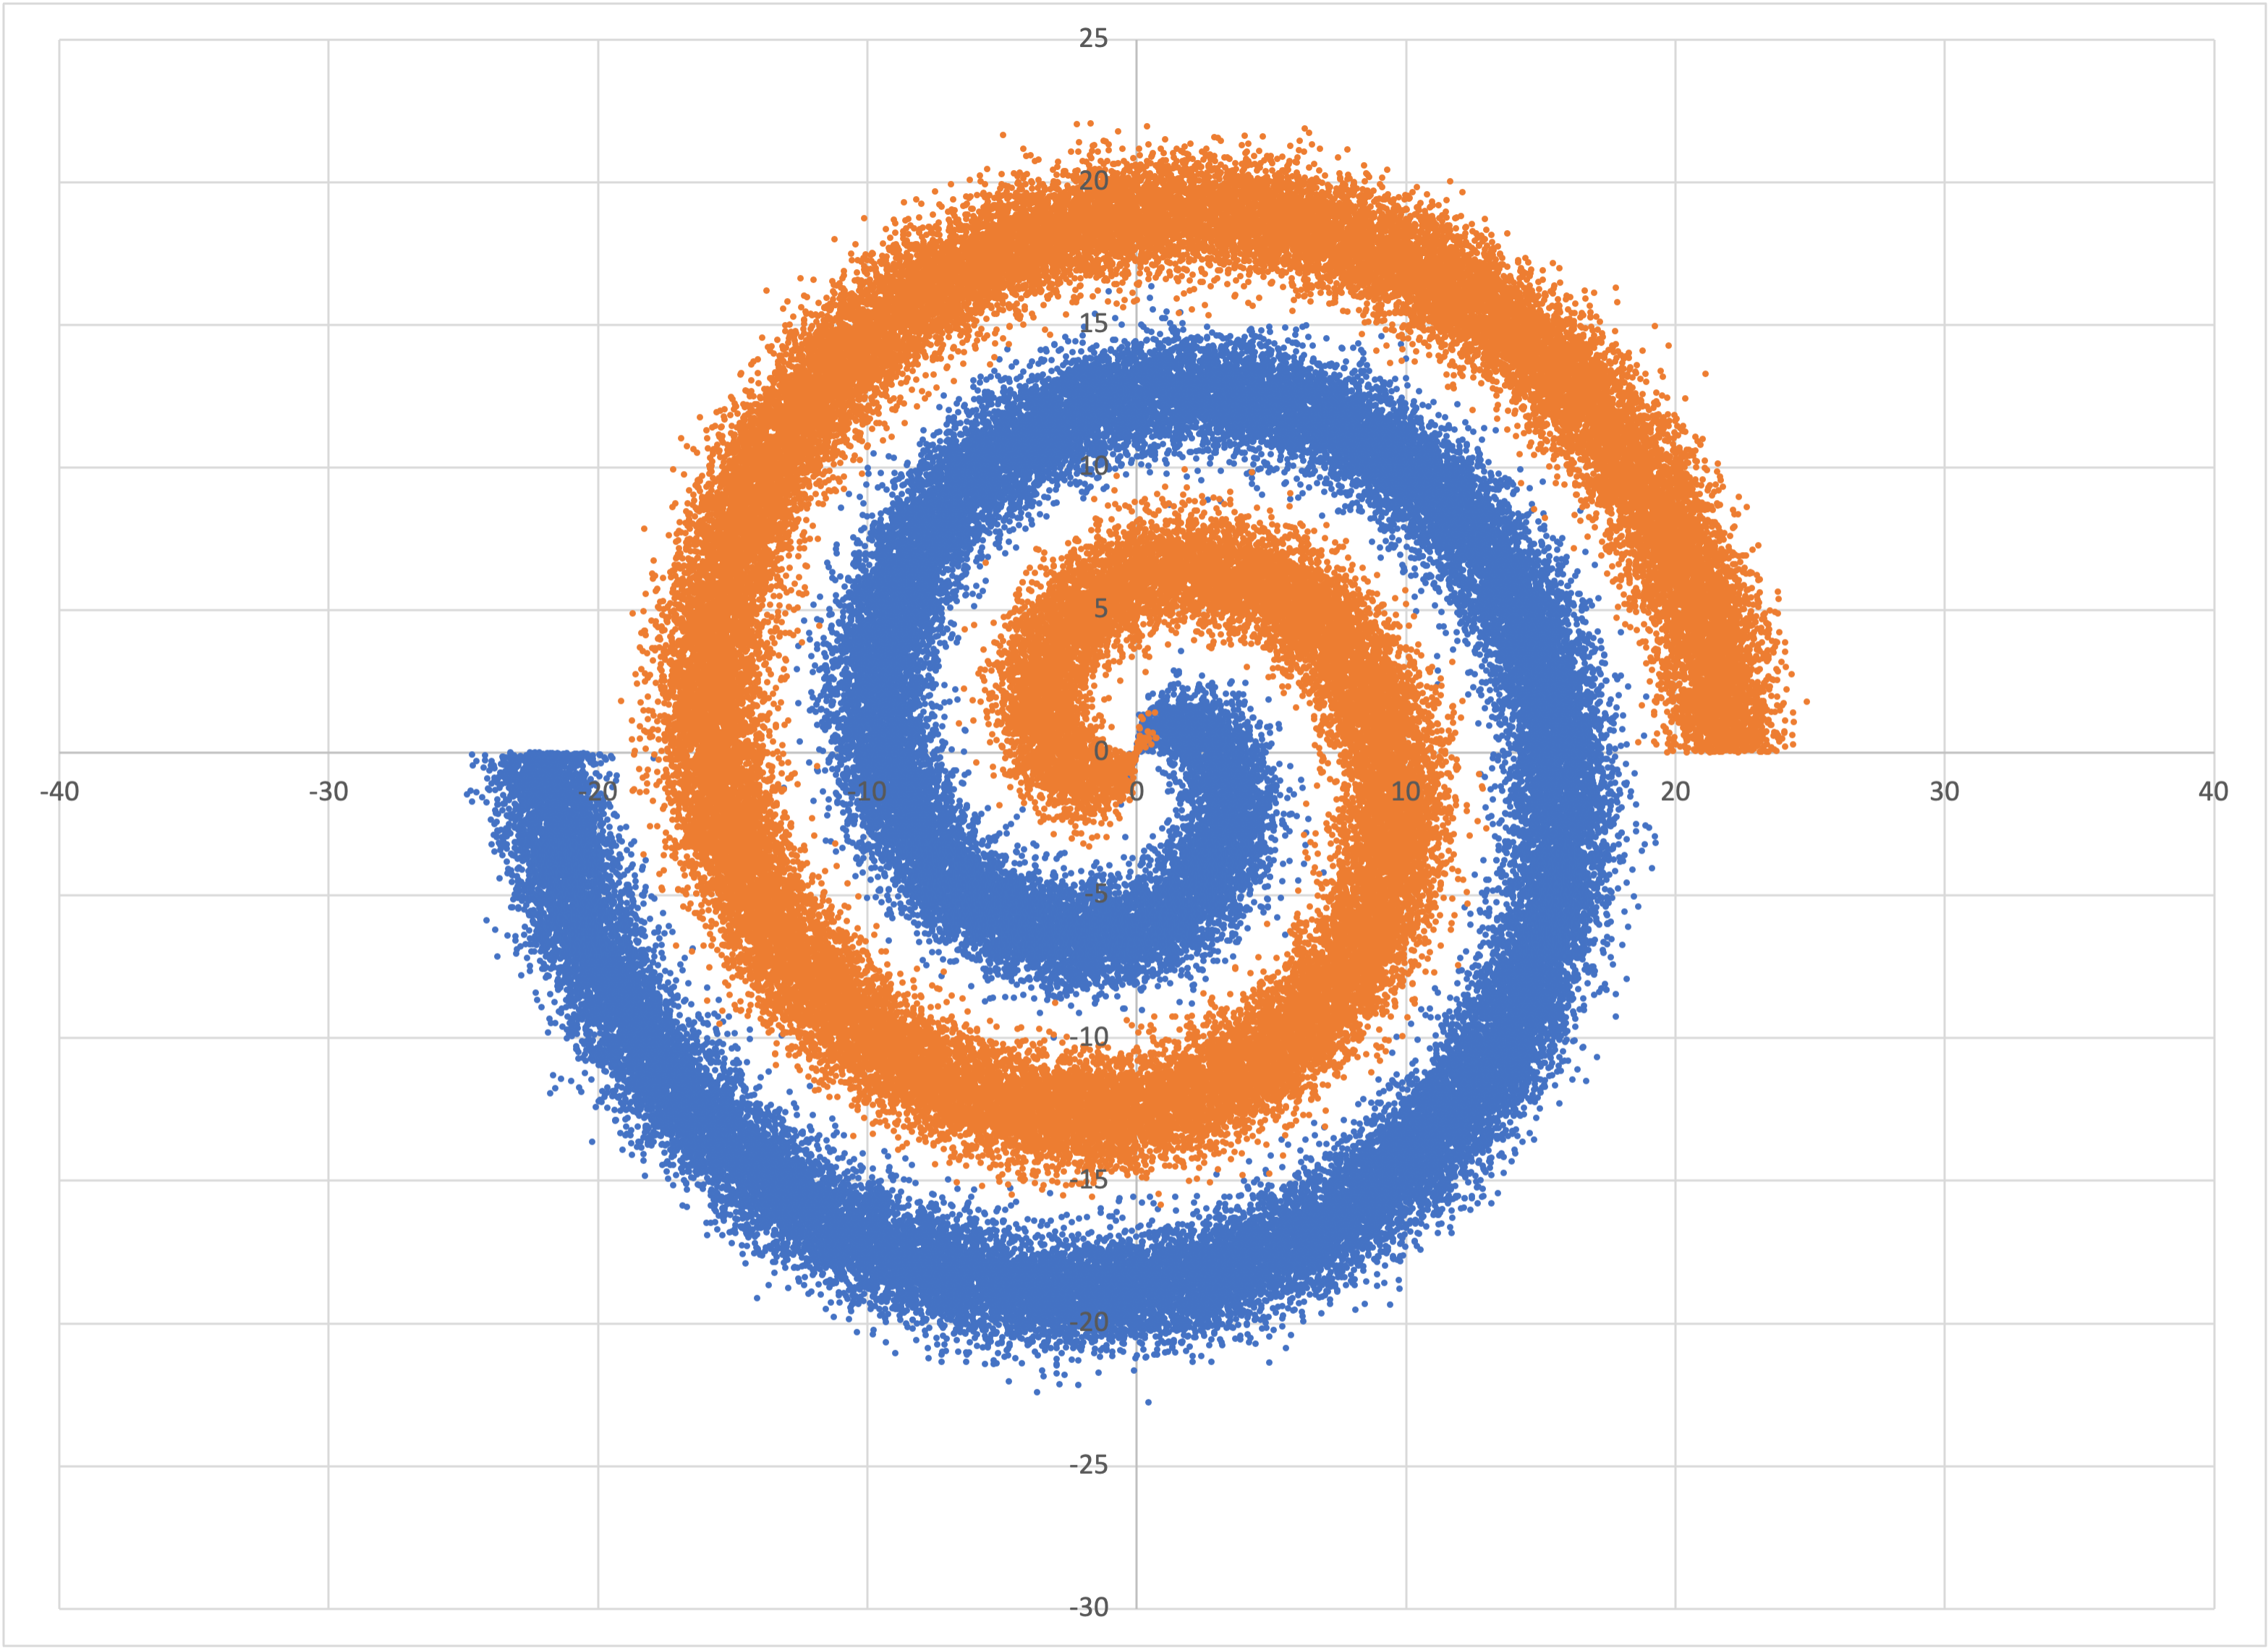 The data in spiral.csv